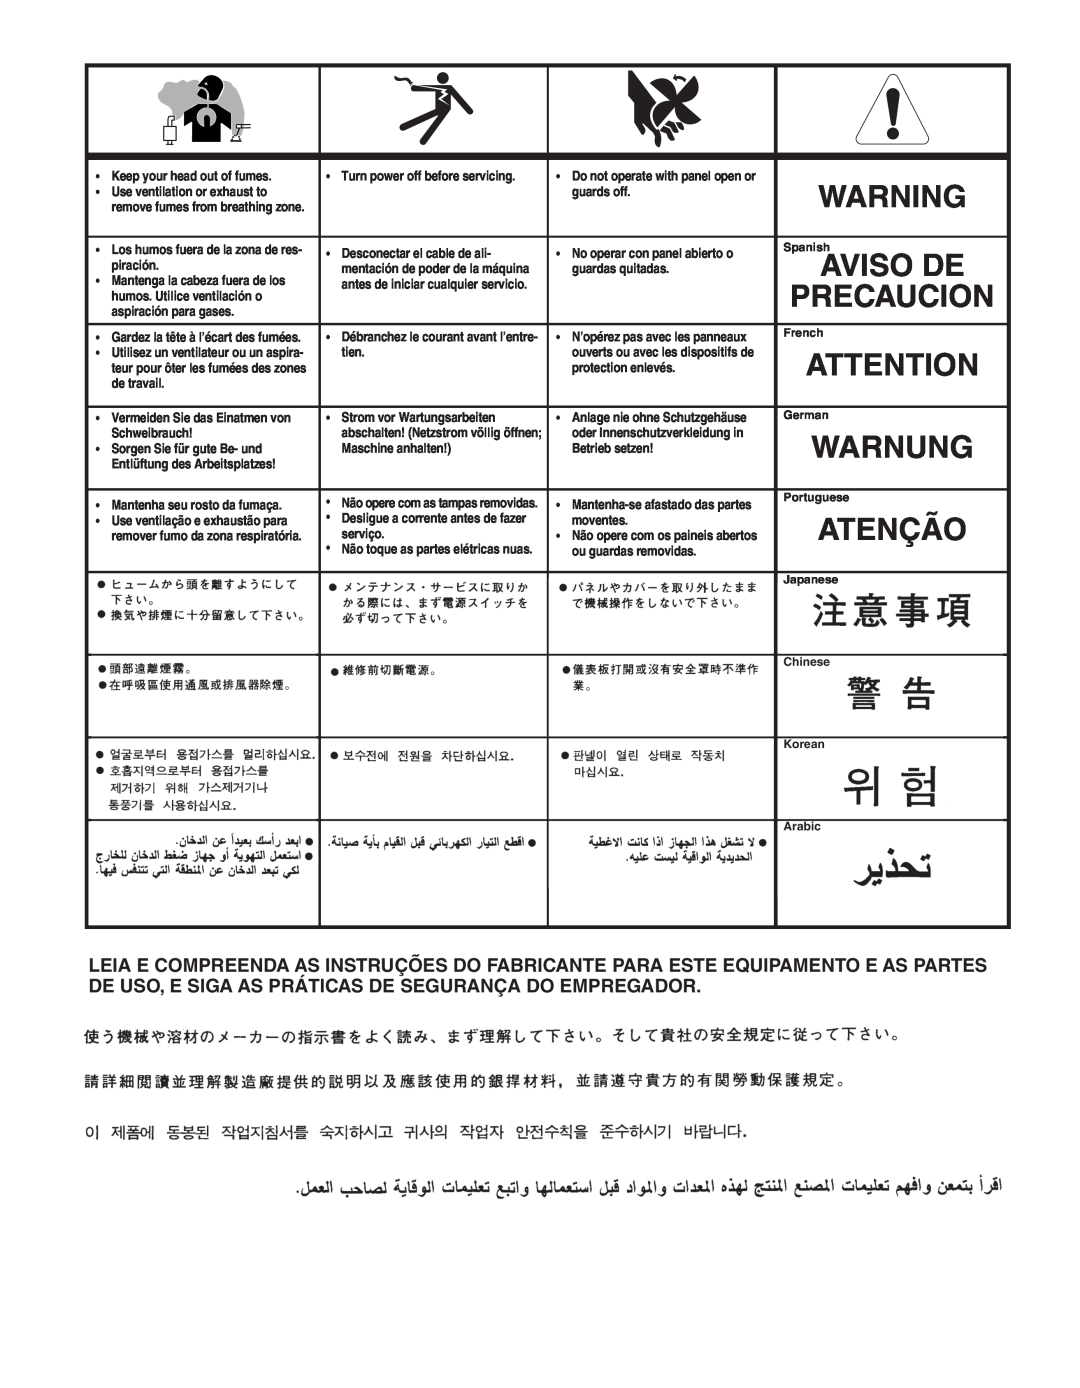 Lincoln Electric IM10023 manual Warnung, Atenção, Precaucion, Aviso De, Keep your head out of fumes 